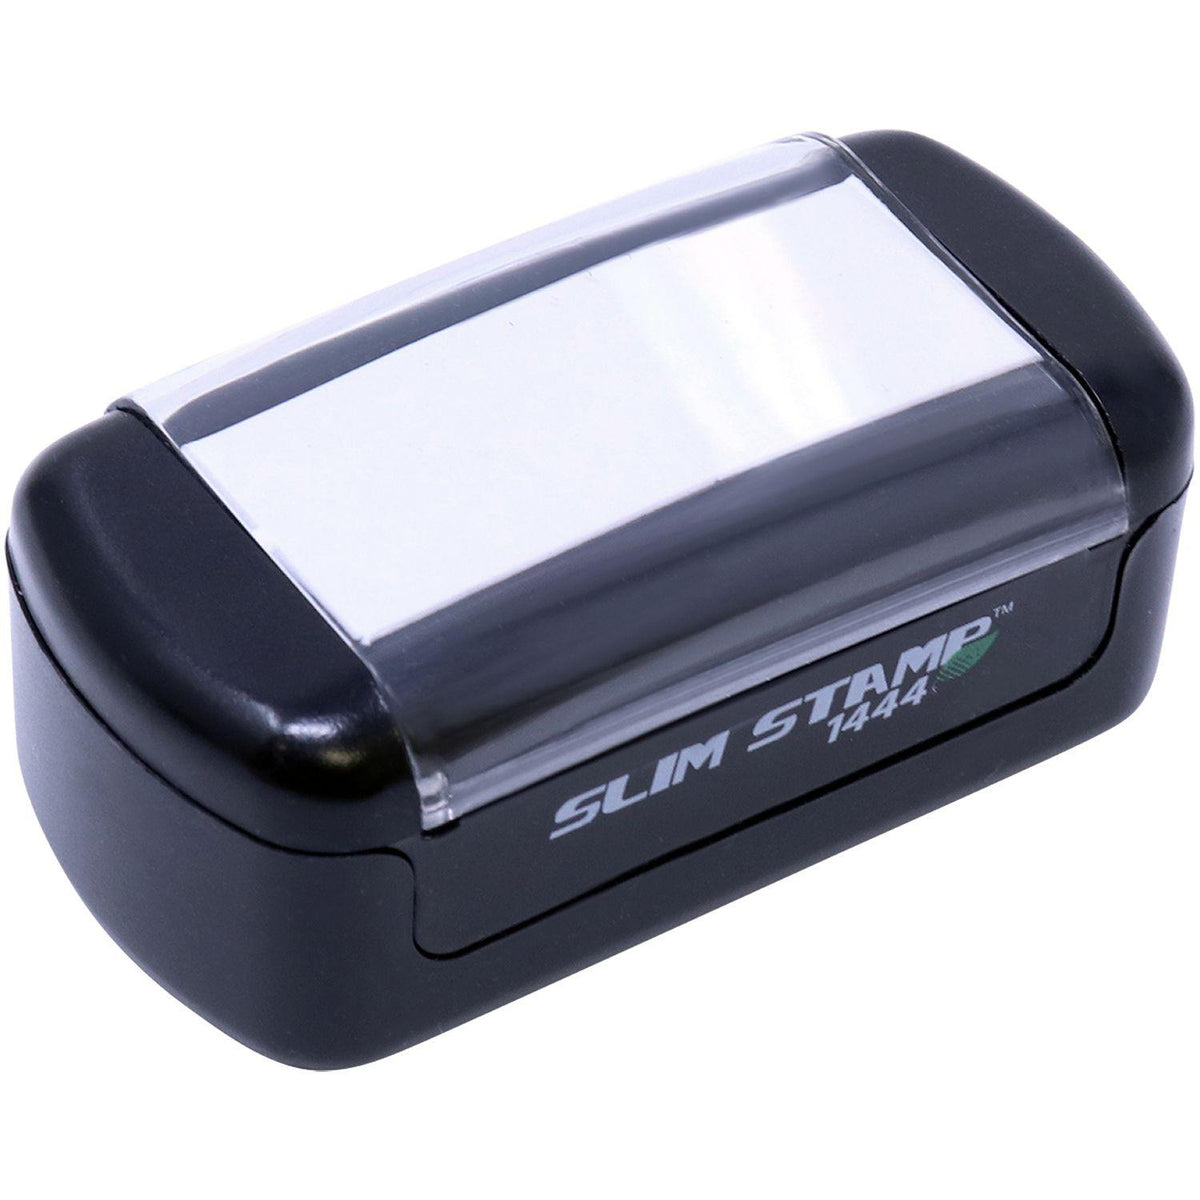 Slim Pre-Inked Brilliant Stamp - Engineer Seal Stamps - Brand_Slim, Impression Size_Small, Stamp Type_Pre-Inked Stamp, Type of Use_General, Type of Use_Teacher